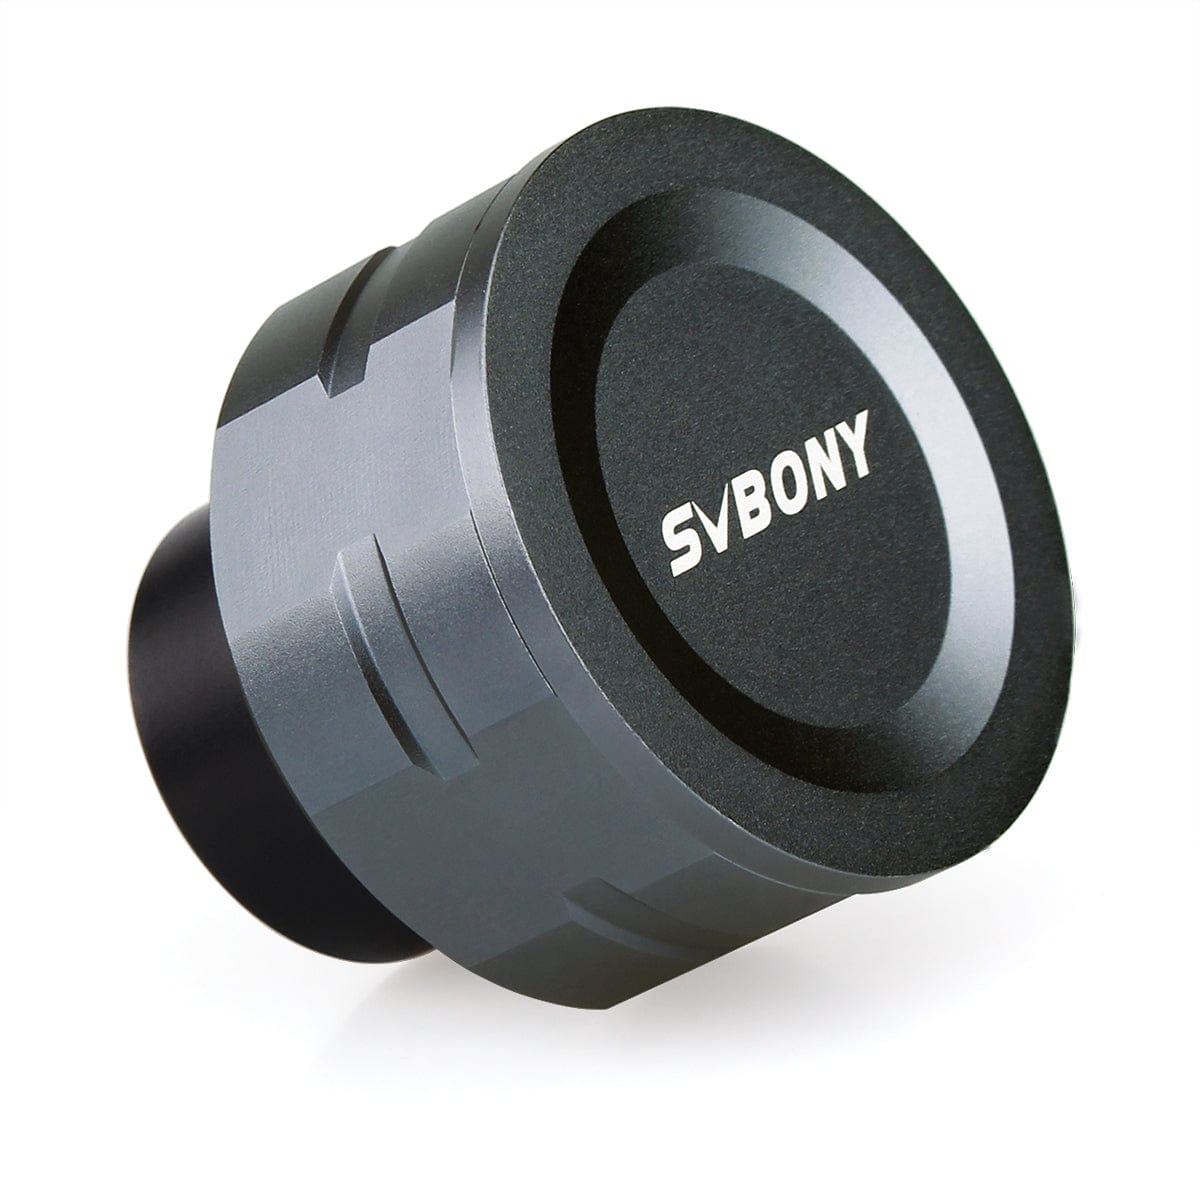 Svbony Accessory SVBONY SV105 Planetary Camera 2MP USB2.0 for Beginners Astrophotography - F9159A